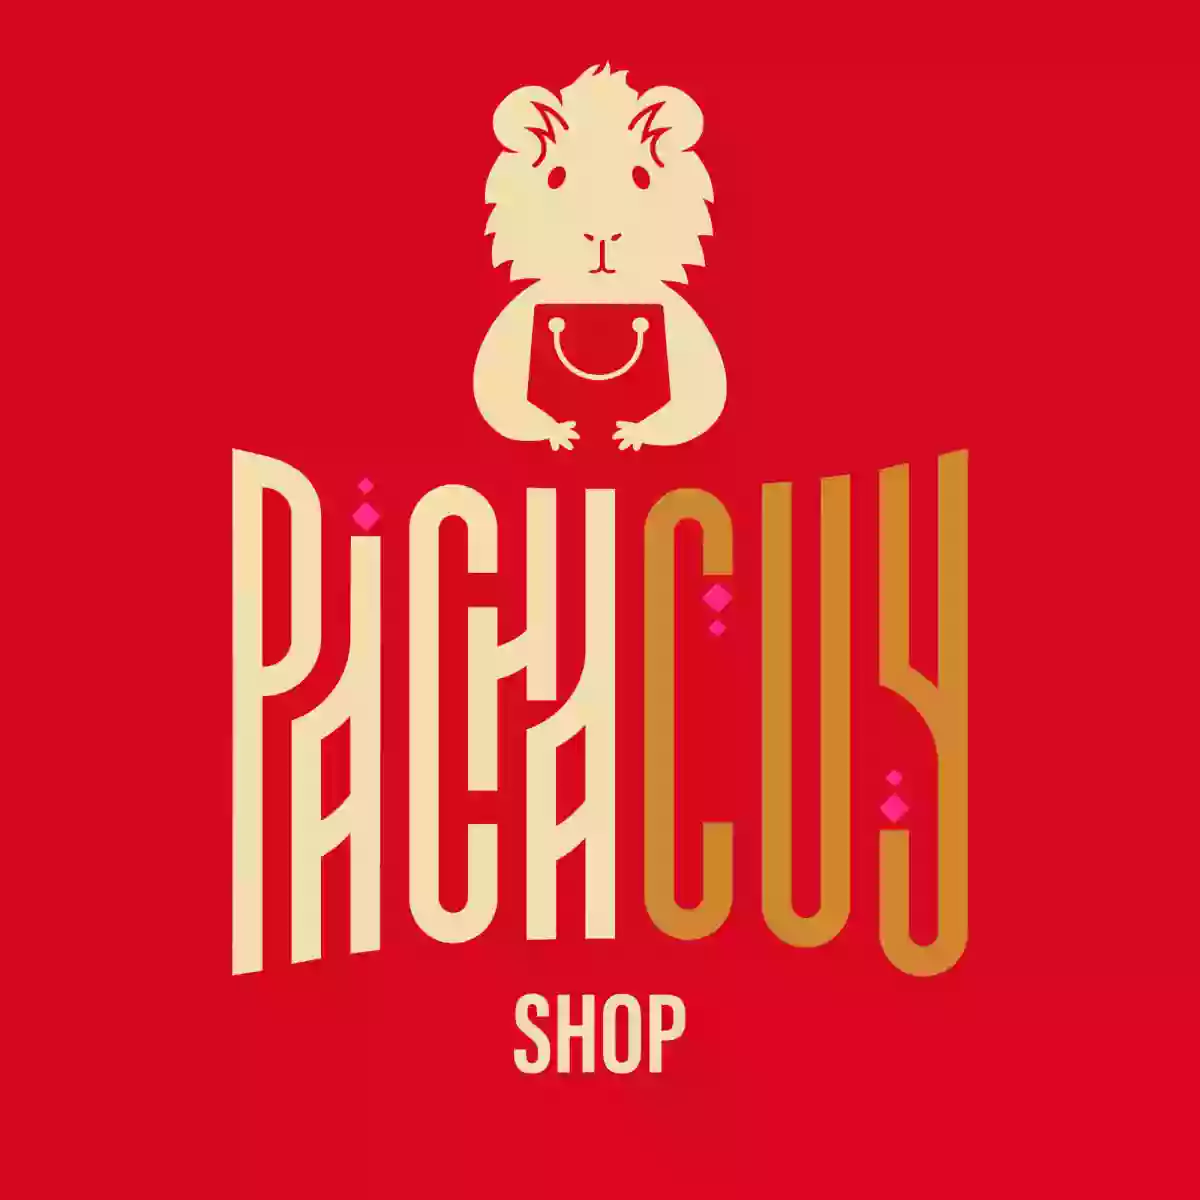 Pachacuy Shop